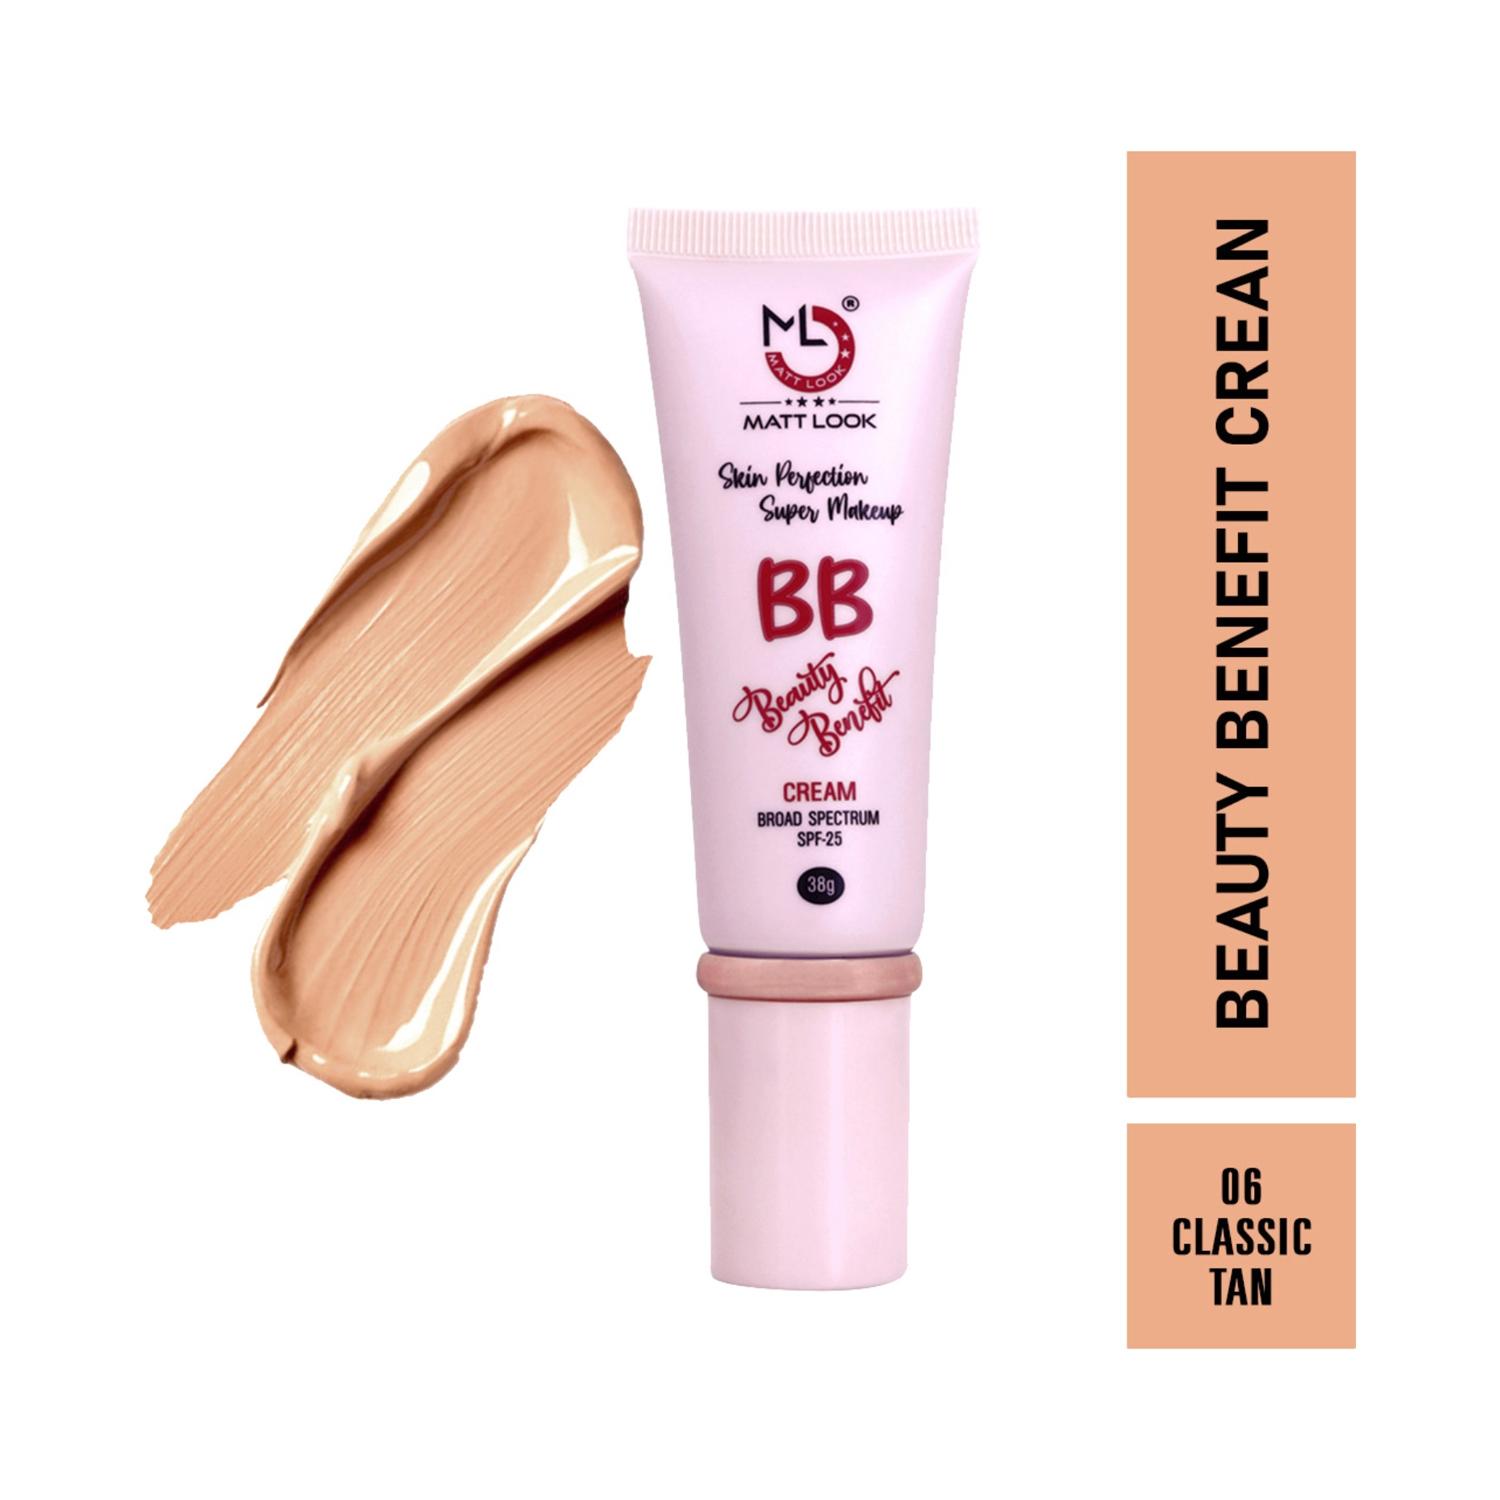 matt look skin perfection super makeup bb beauty benefit cream with spf 25 - 06 classic tan (38g)